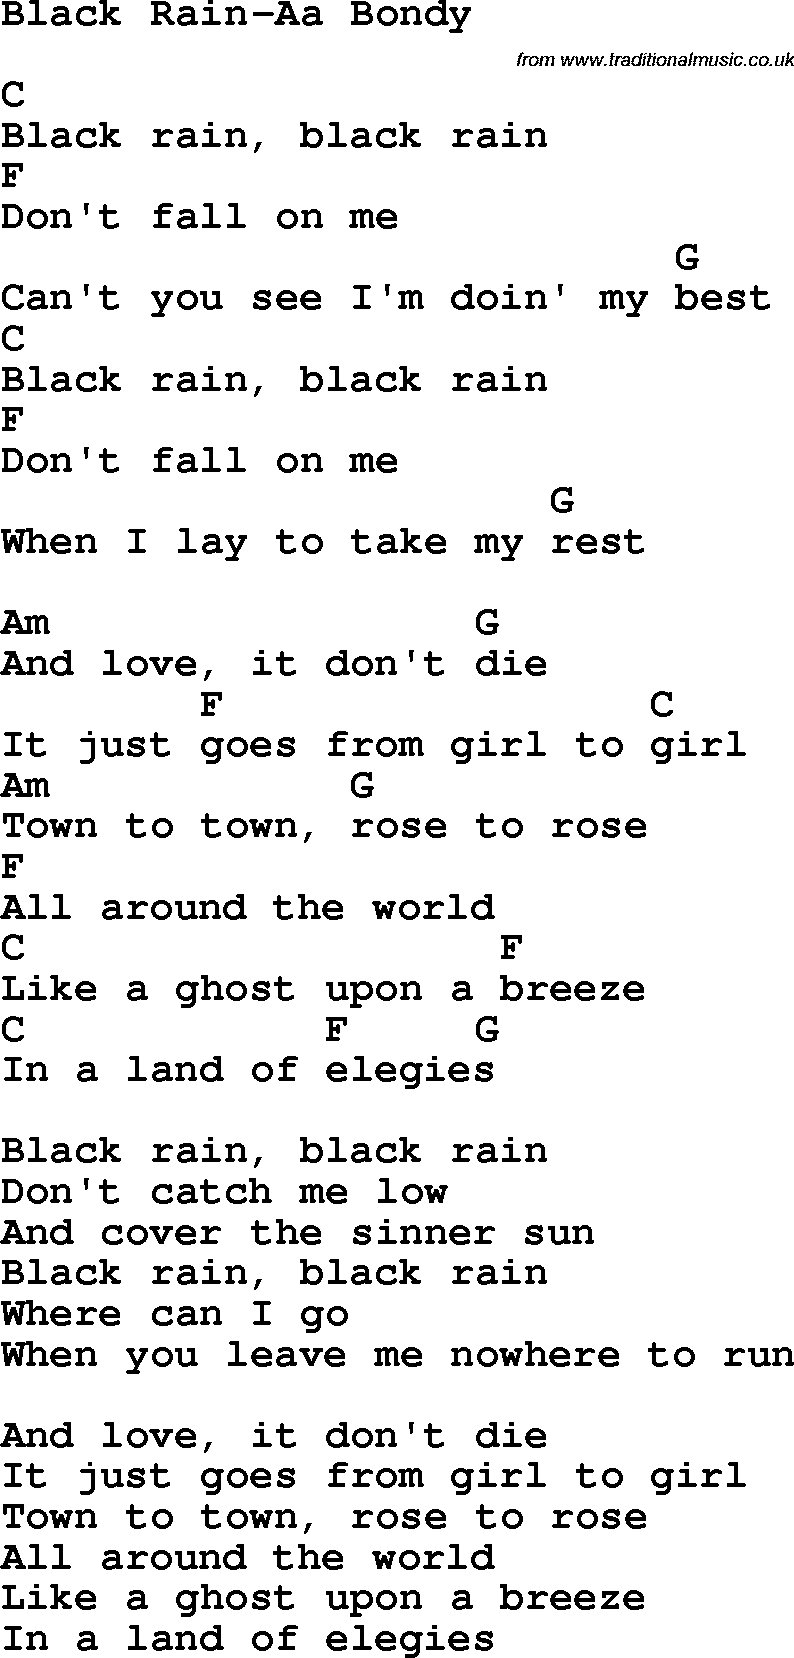 Protest Song Black Rain-Aa Bondy lyrics and chords